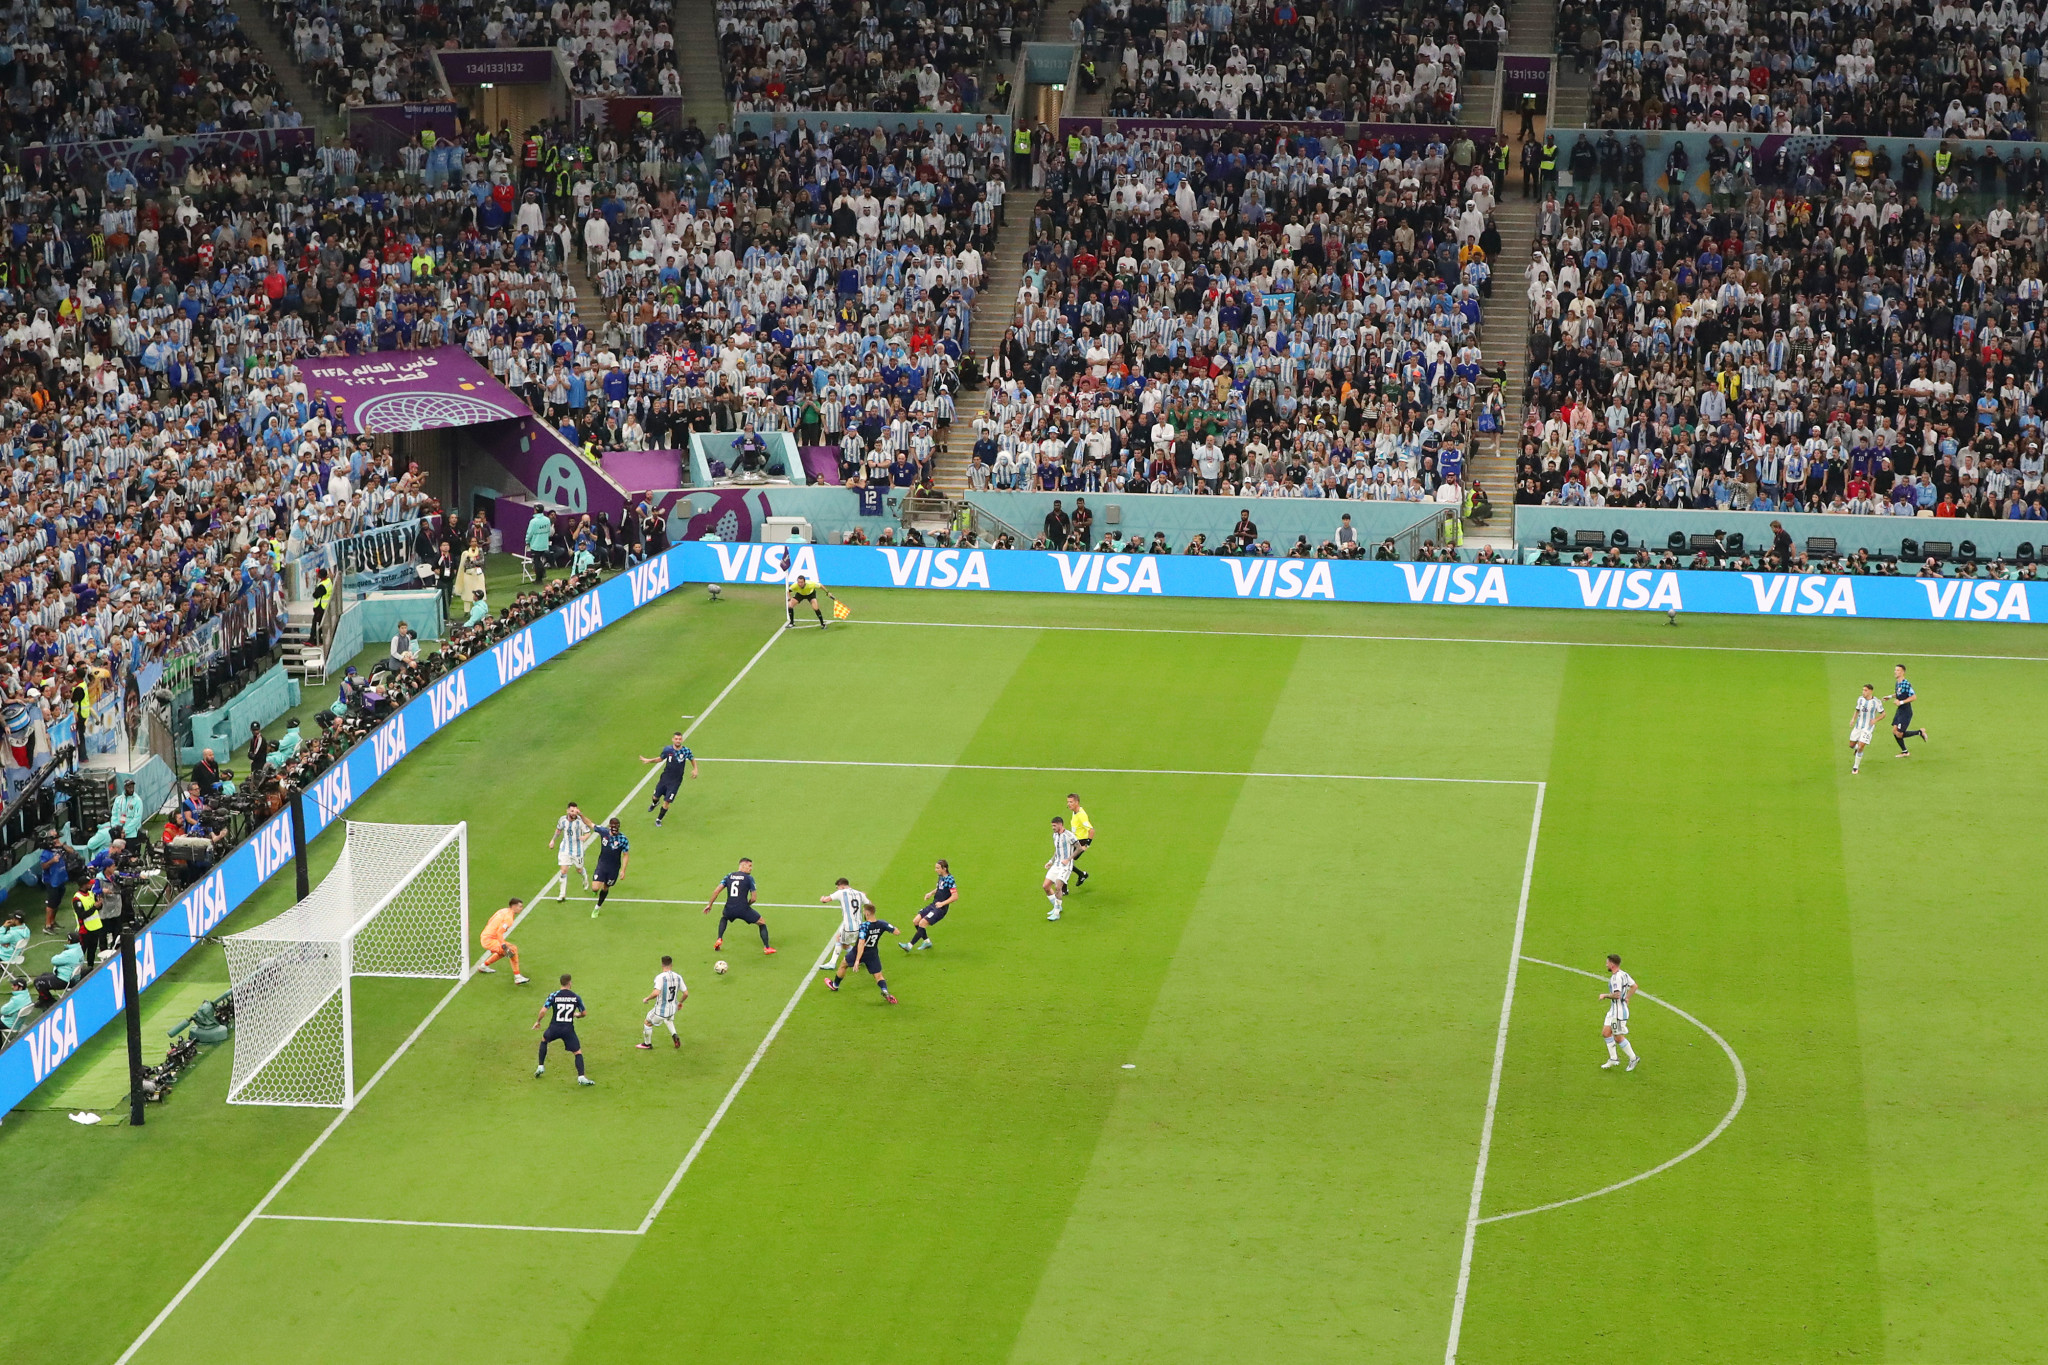 Julian Alvarez scored twice in Argentina's victory over Croatia ©Getty Images